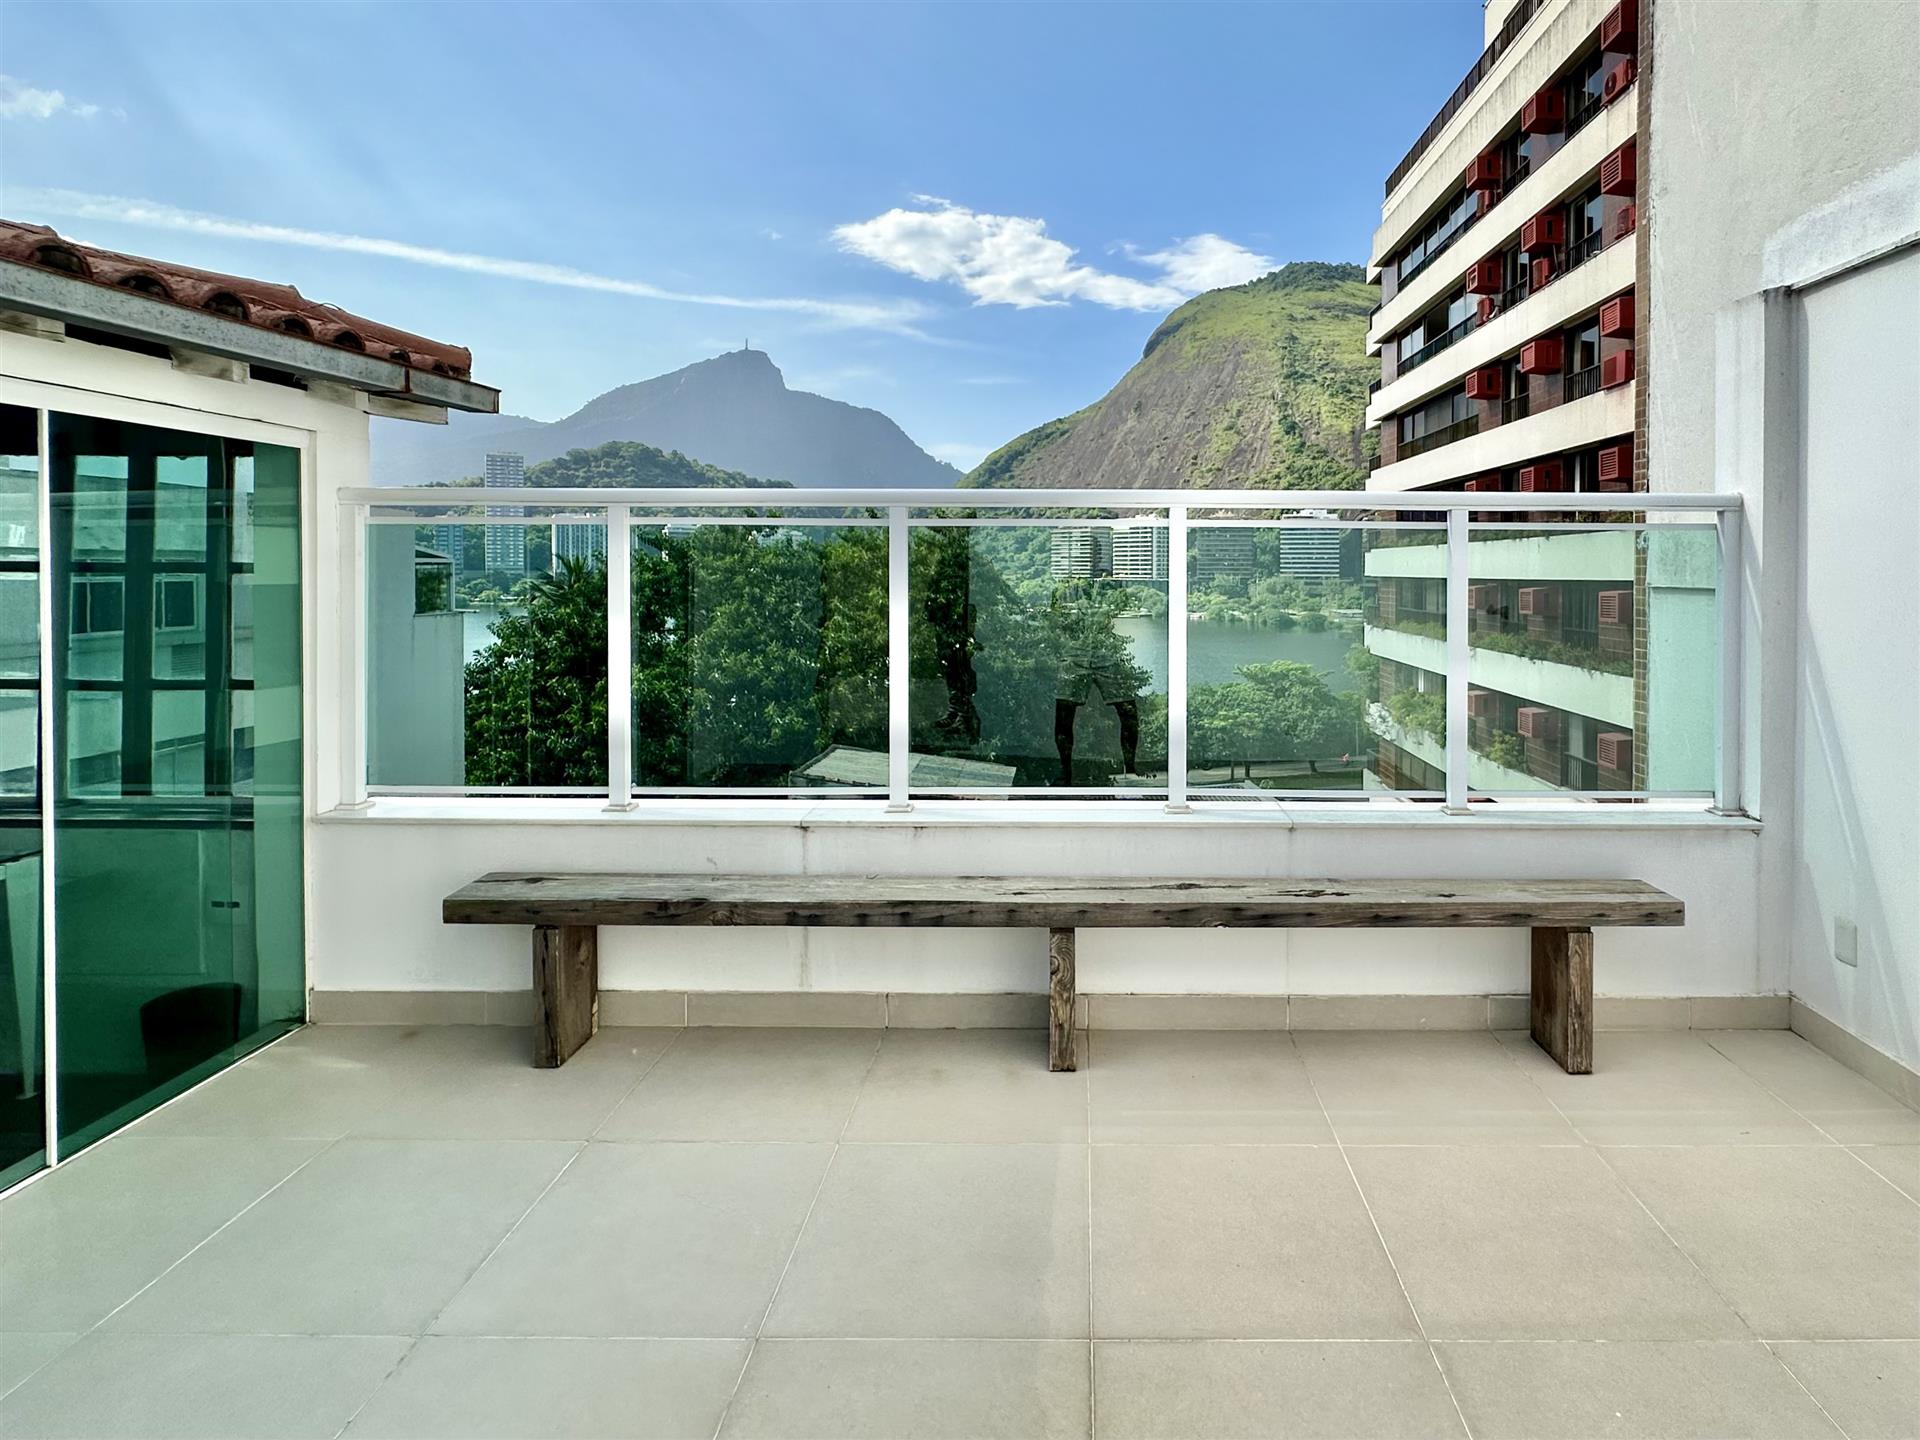 Cobertura Duplex em Ipanema com Vista Panorâmica 